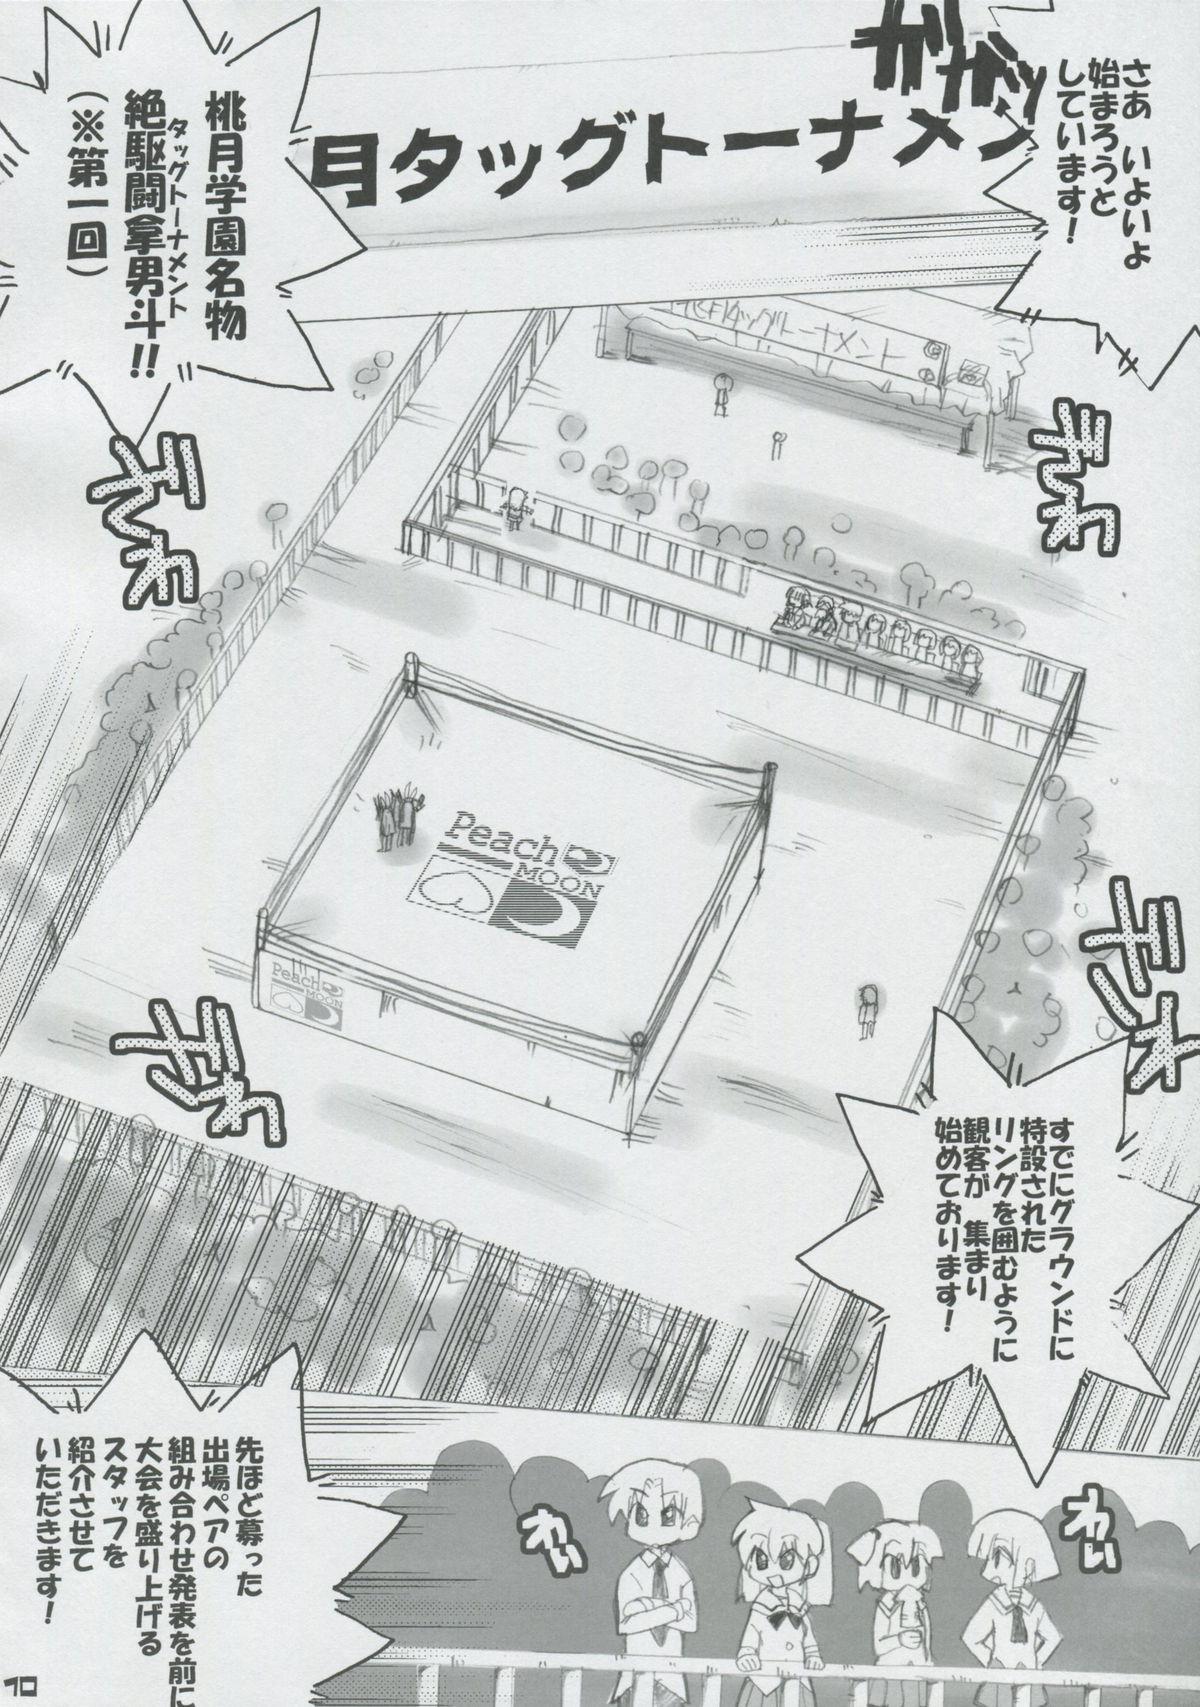 Teenie Momo Tsuki Monsters 1st-half - Pani poni dash Little - Page 9